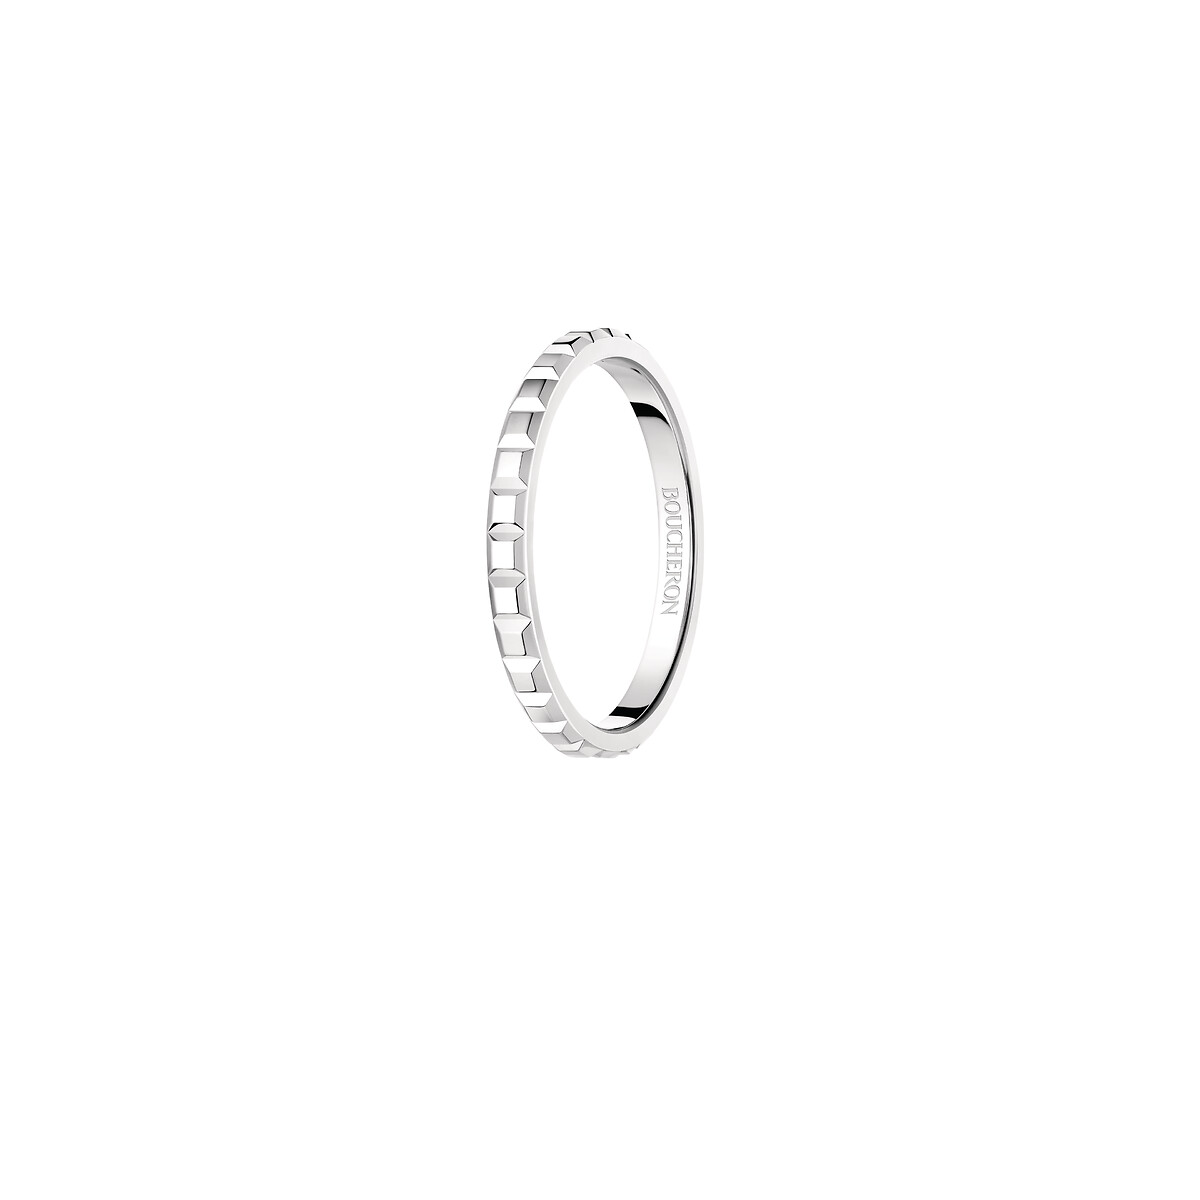 Second product packshot​ Clou de Paris Mini Wedding Band ring